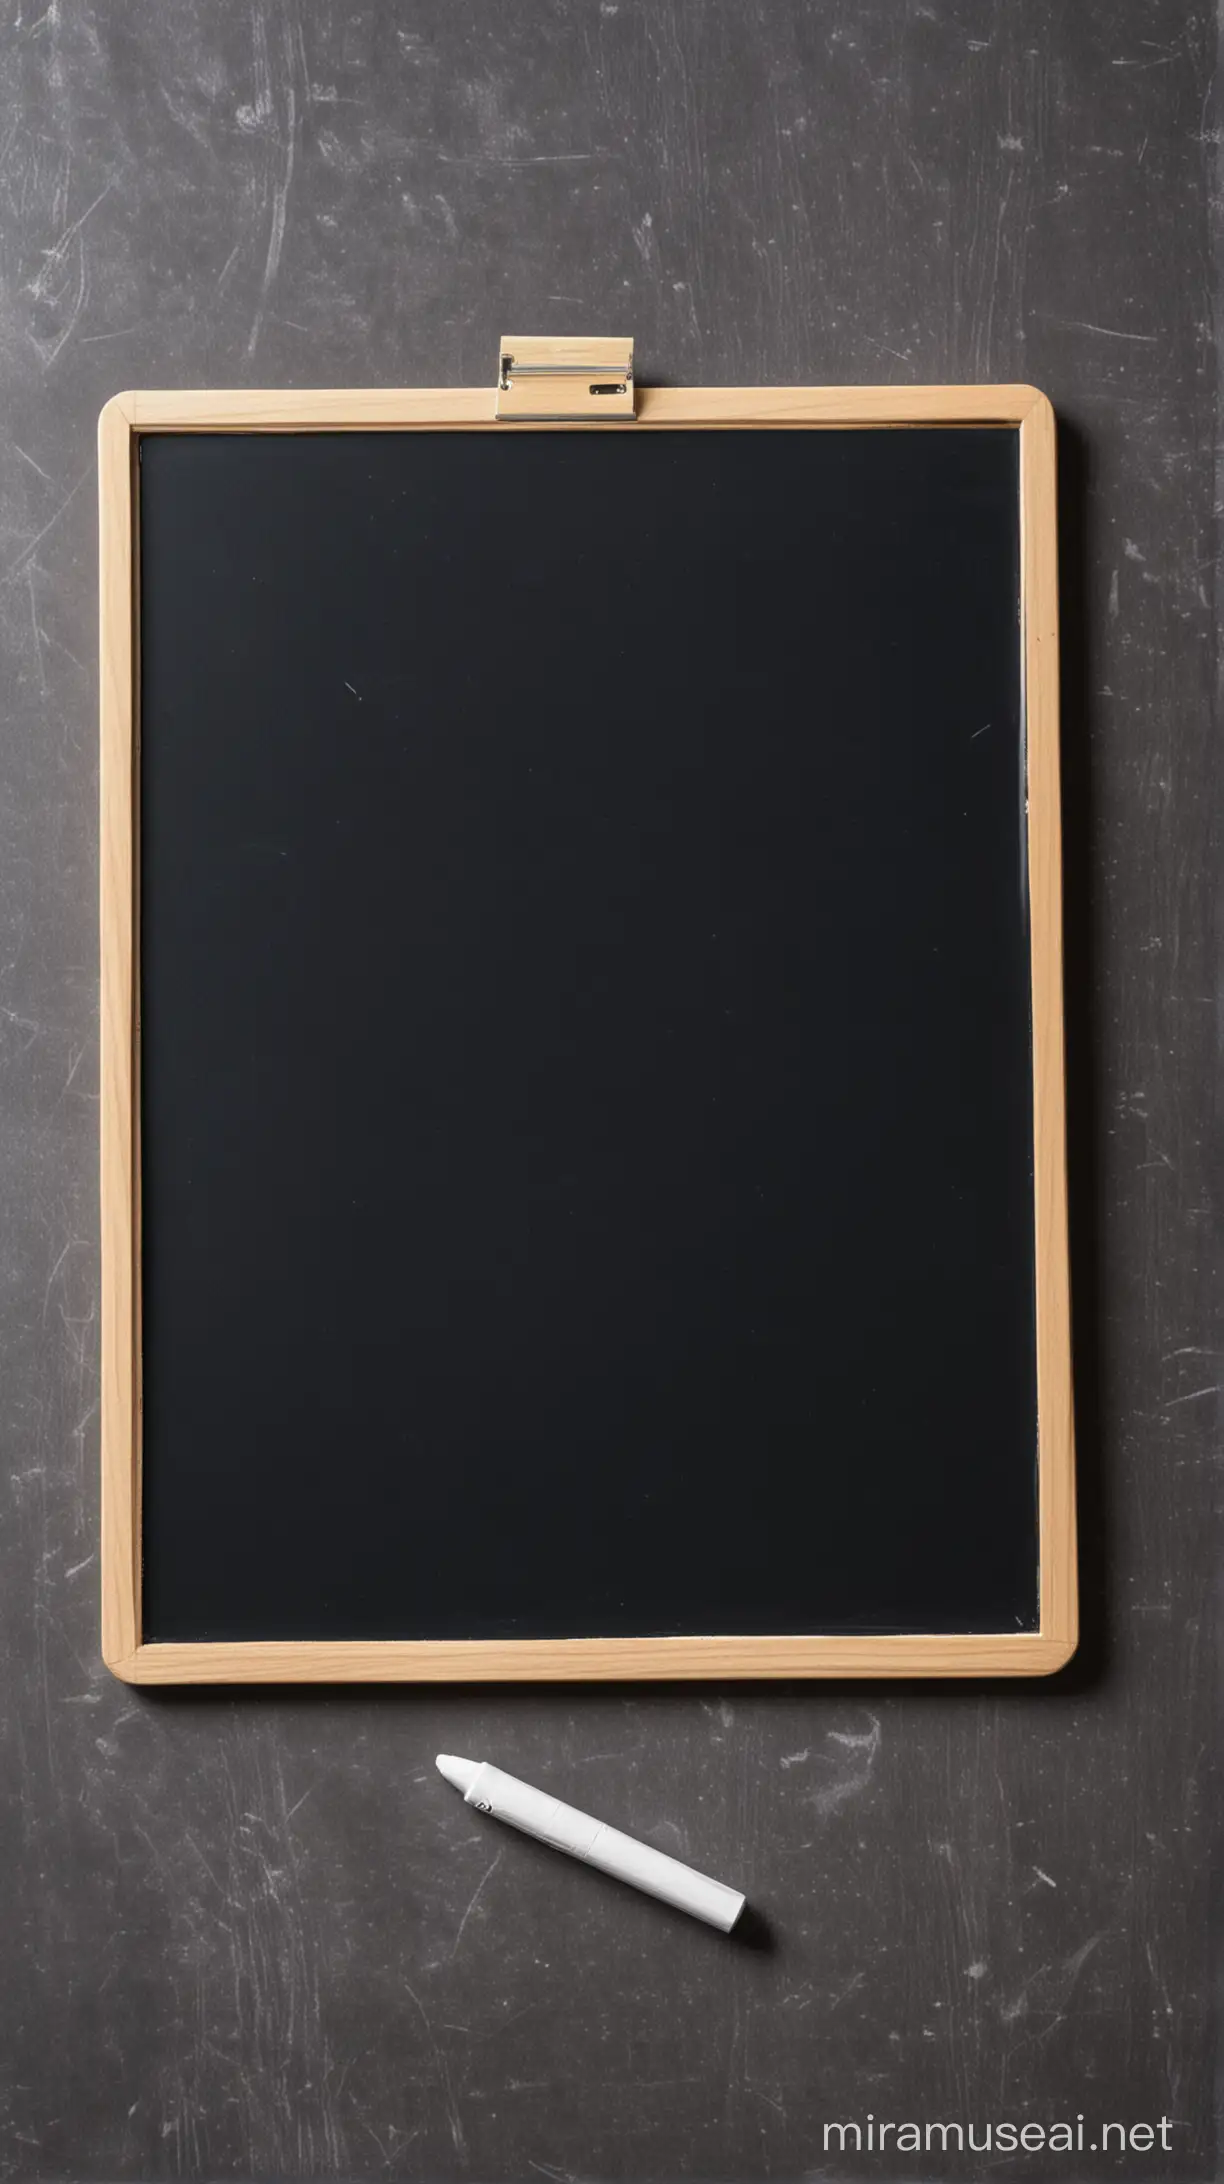 Minimalist Black Writing Board with White Eraser